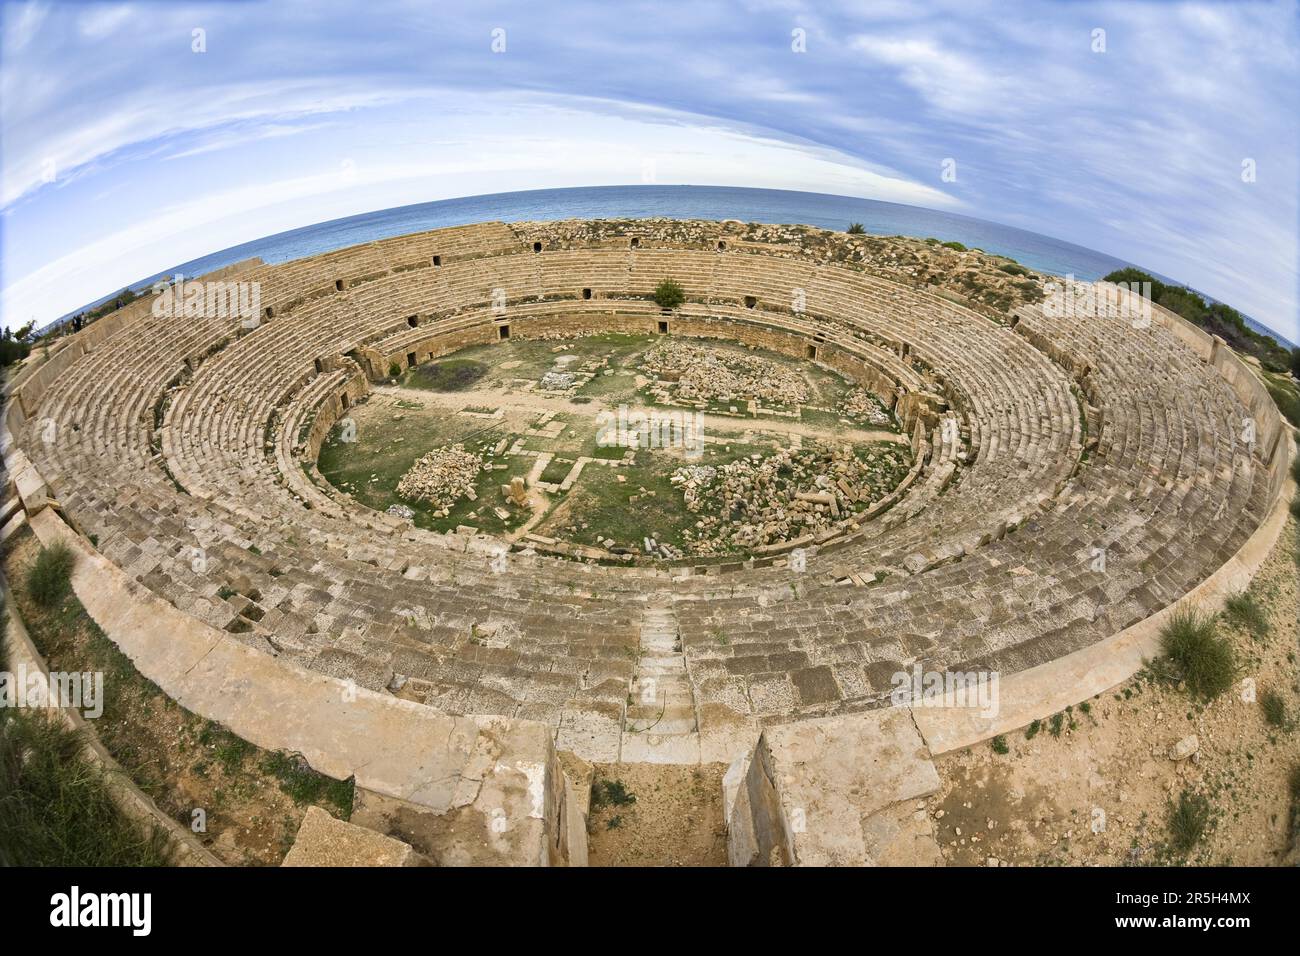 Roman amphitheatre, ruined city of Leptis Magna, Libya Stock Photo